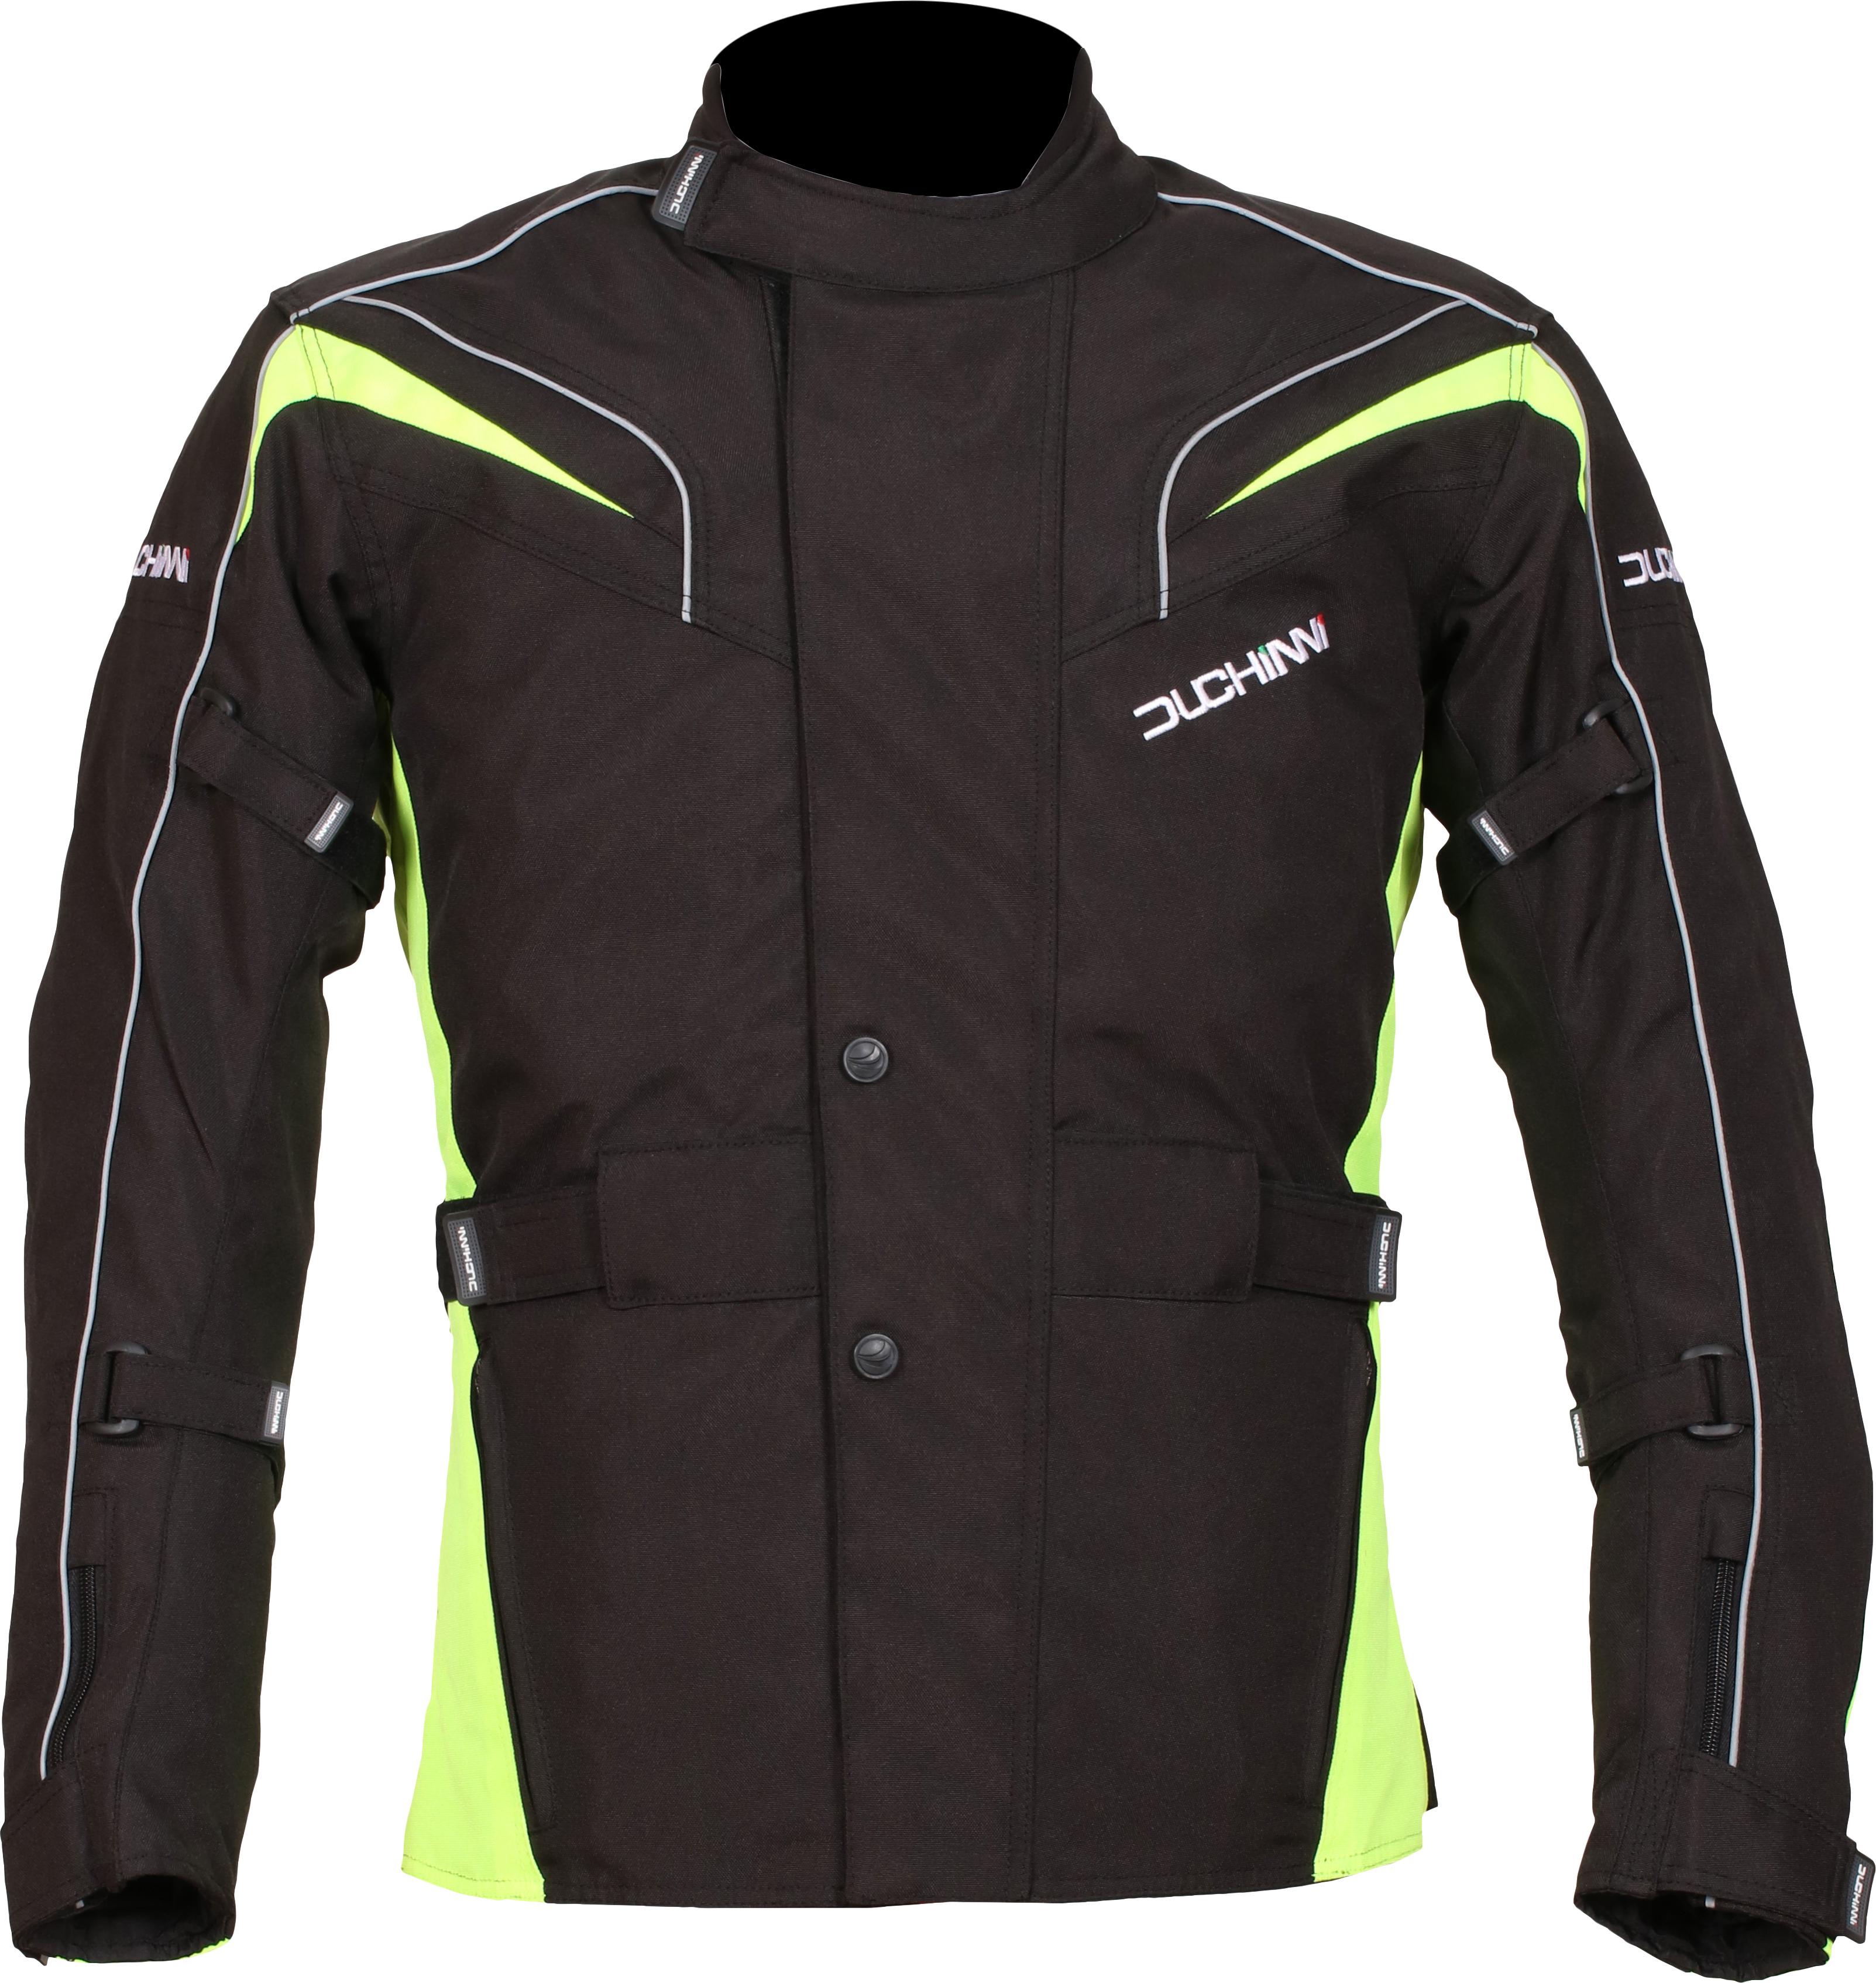 Duchinni Hurricane Motorcycle Jacket - Black And Neon, L